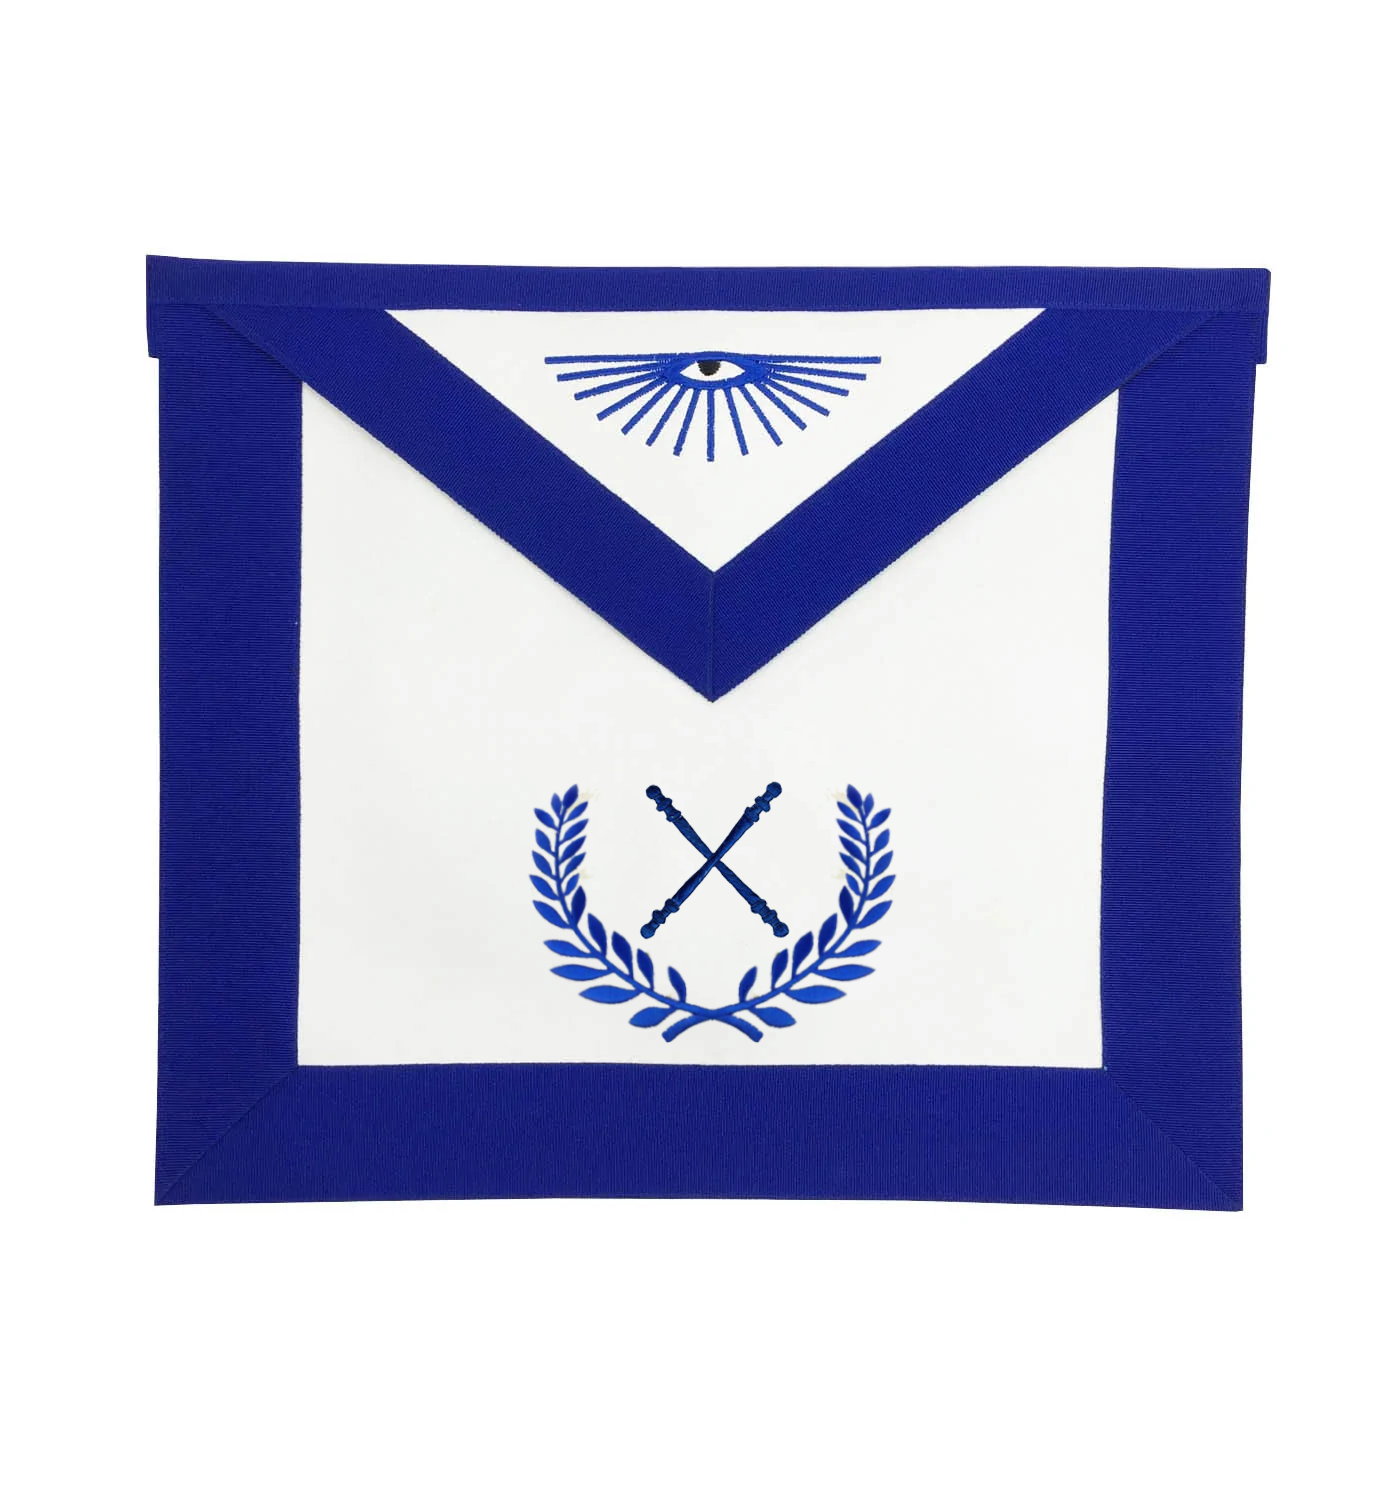 Marshal Blue Lodge Officer Apron - Royal Blue with Wreath - Bricks Masons